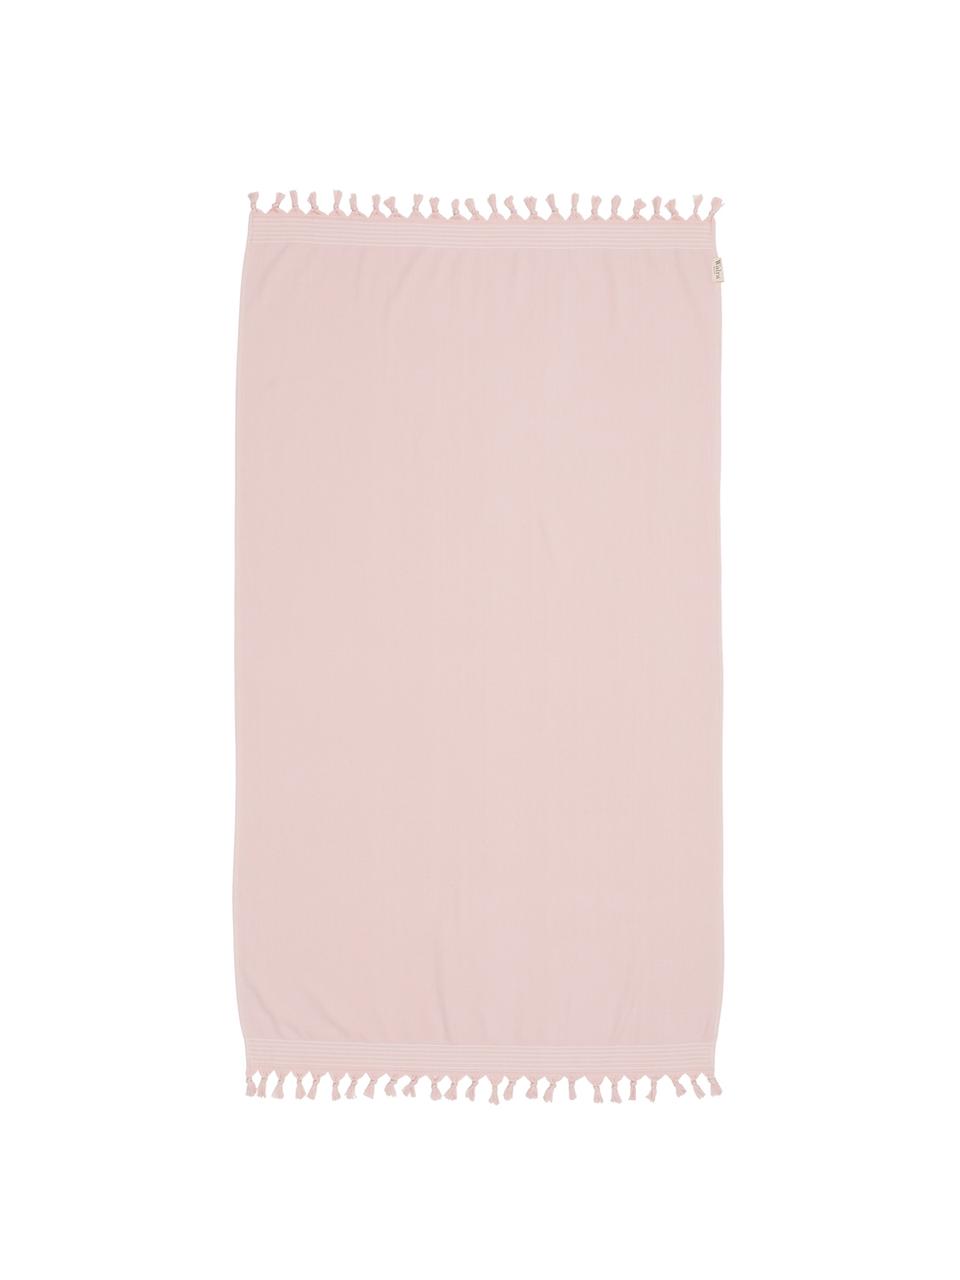 Telo mare Soft Cotton, Retro: Terry, Rosa, bianco, Larg. 100 x Lung. 180 cm